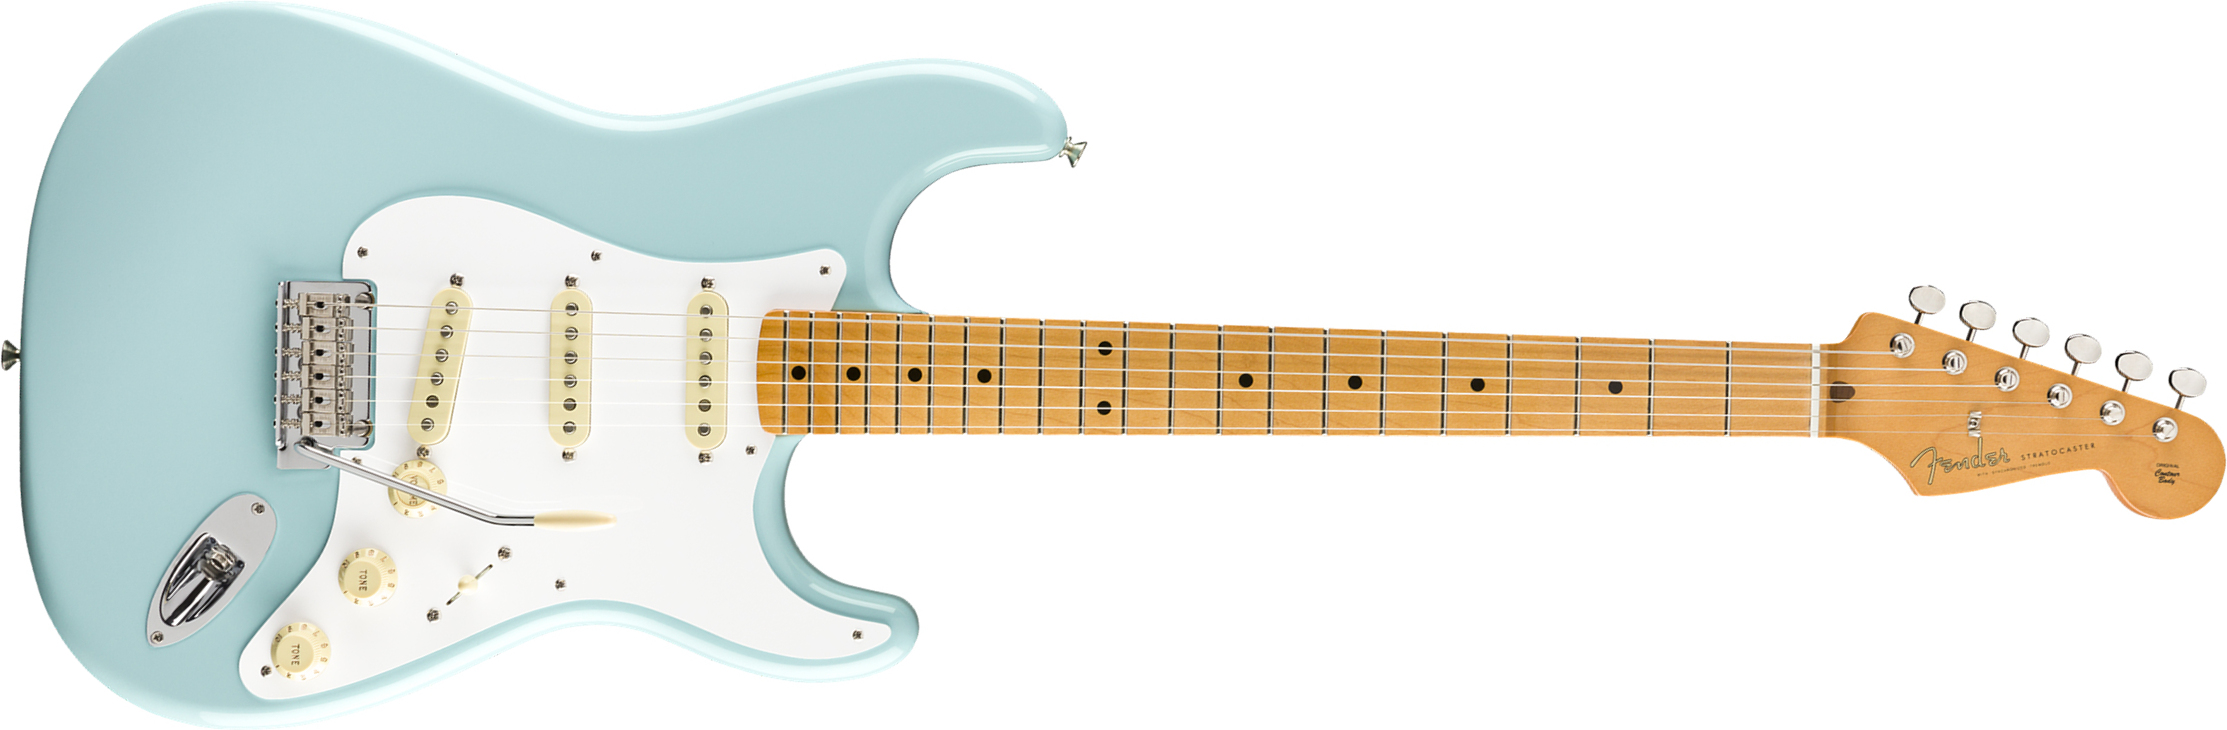 Fender Strat 50s Vintera Modified Mex Mn - Daphne Blue - Str shape electric guitar - Main picture